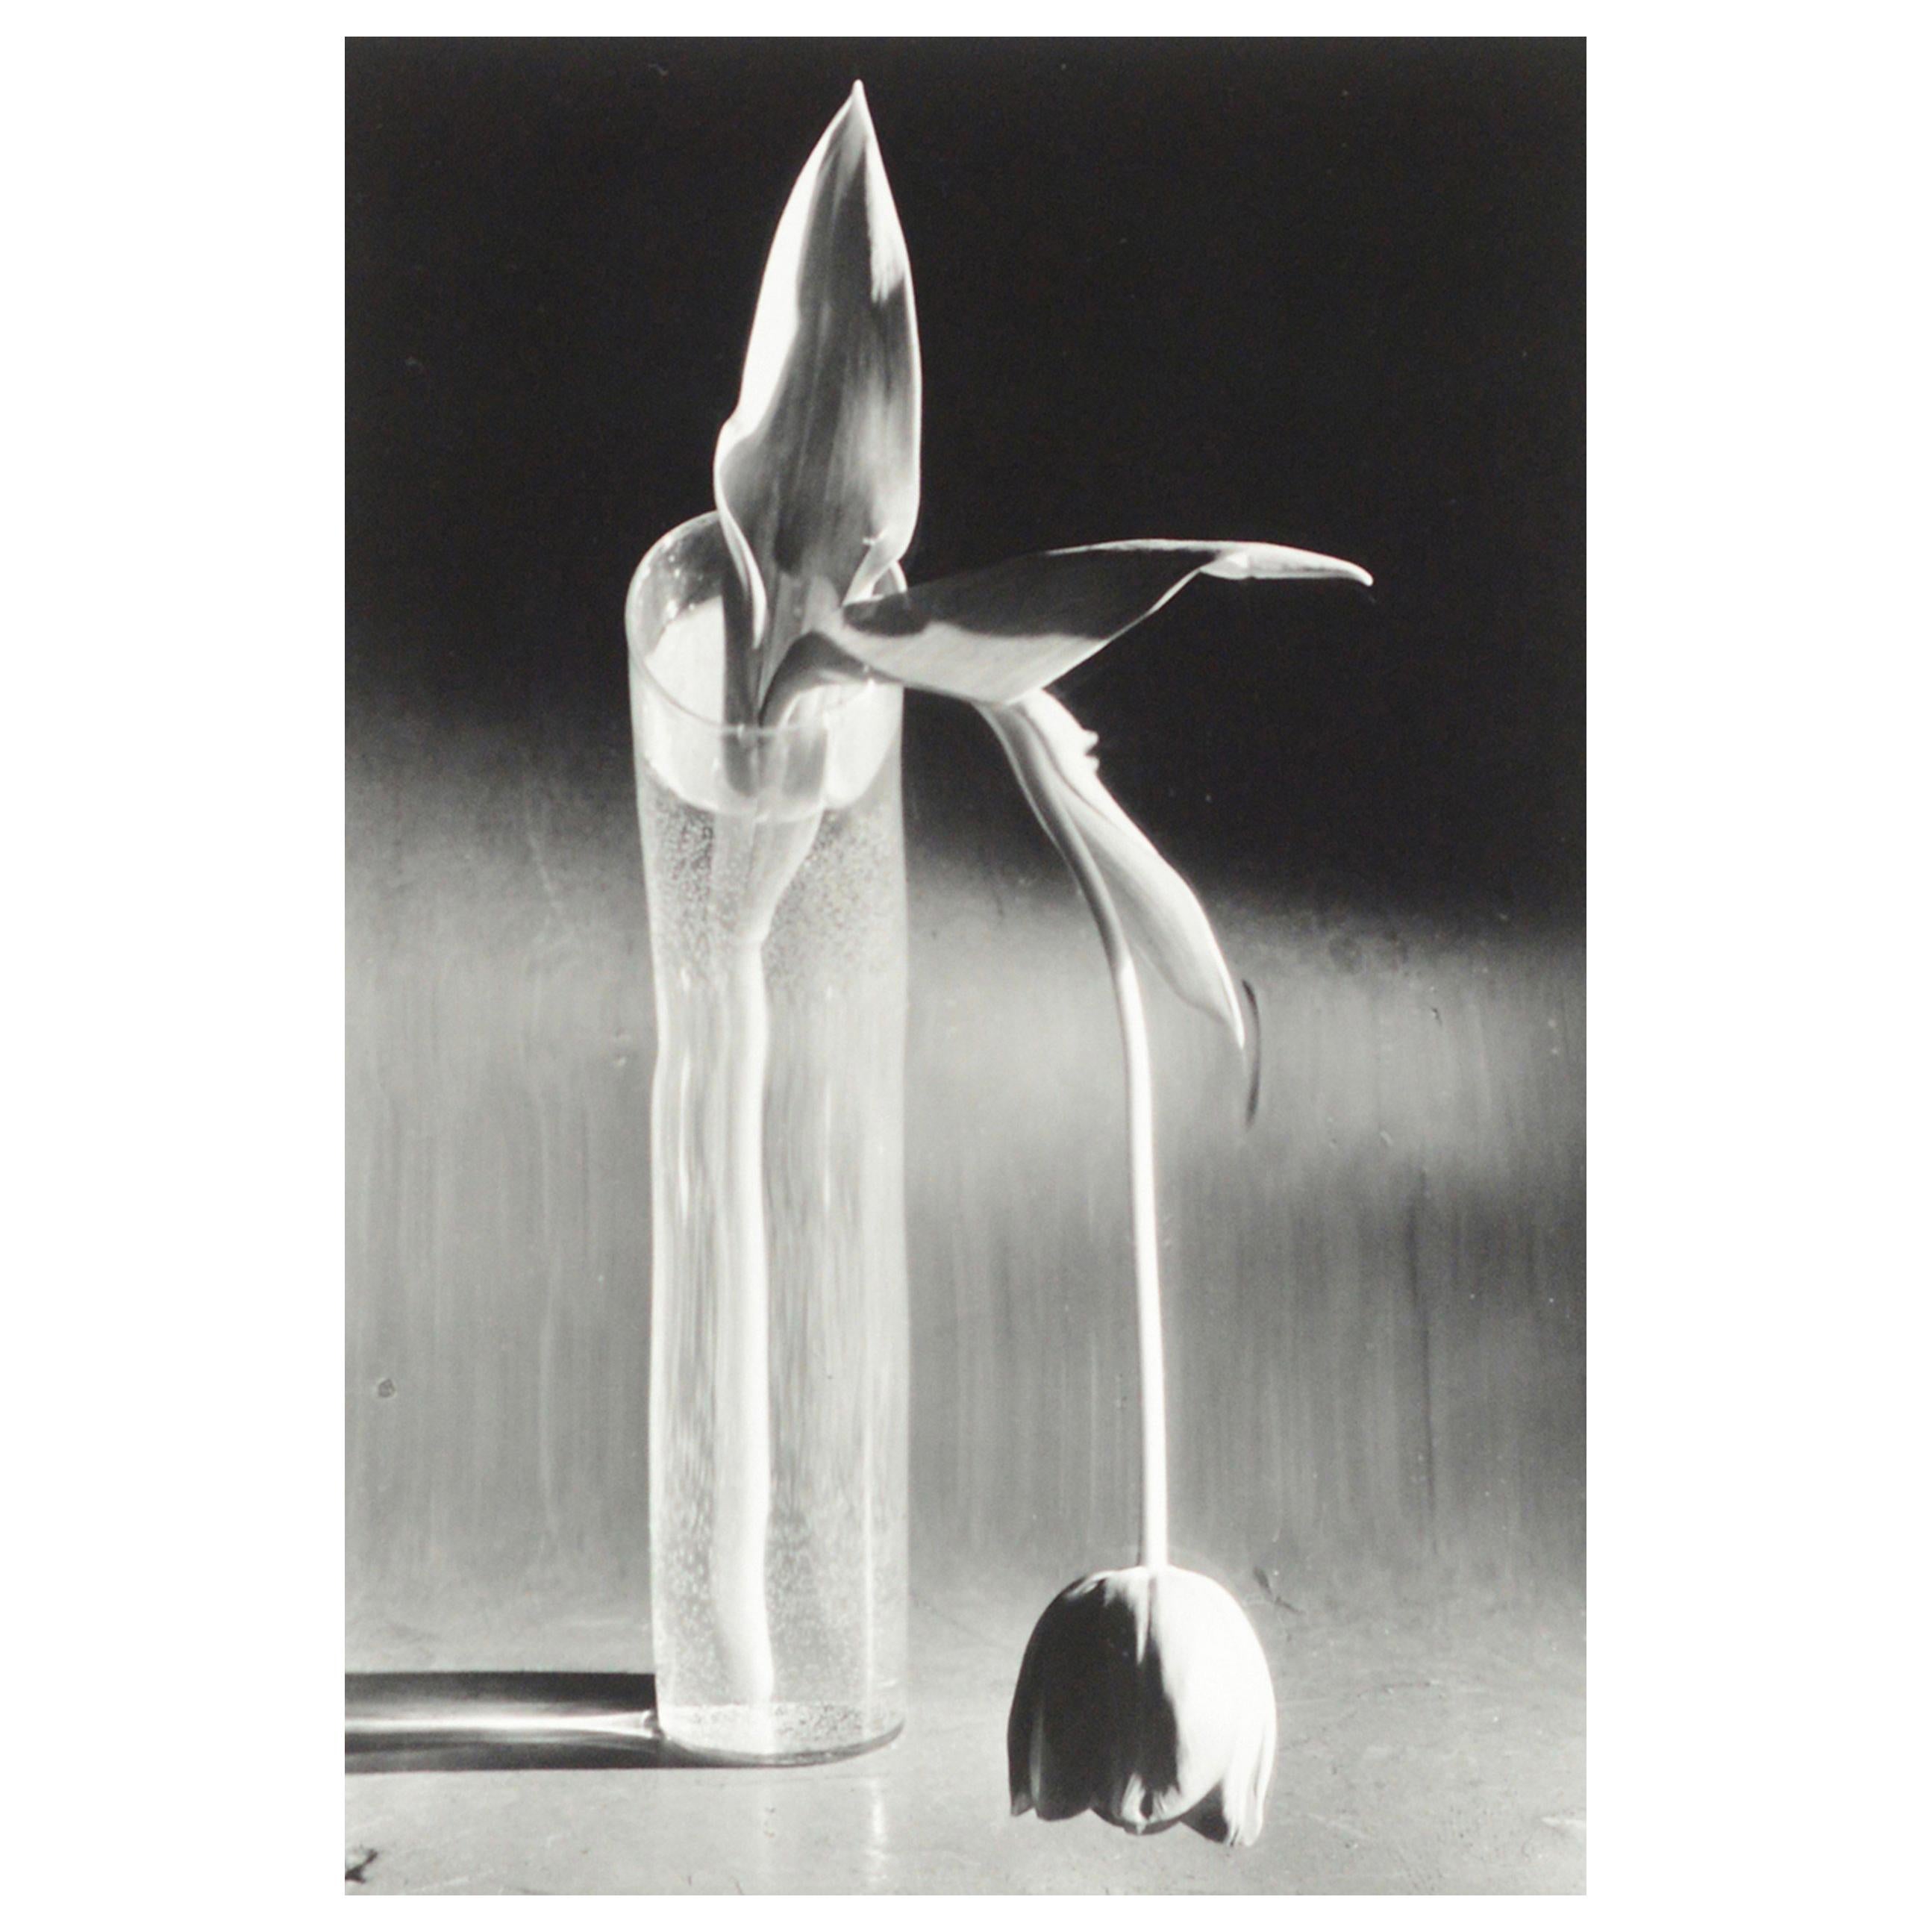 Andre Kertesz "Melancholische Tulpe", 1929